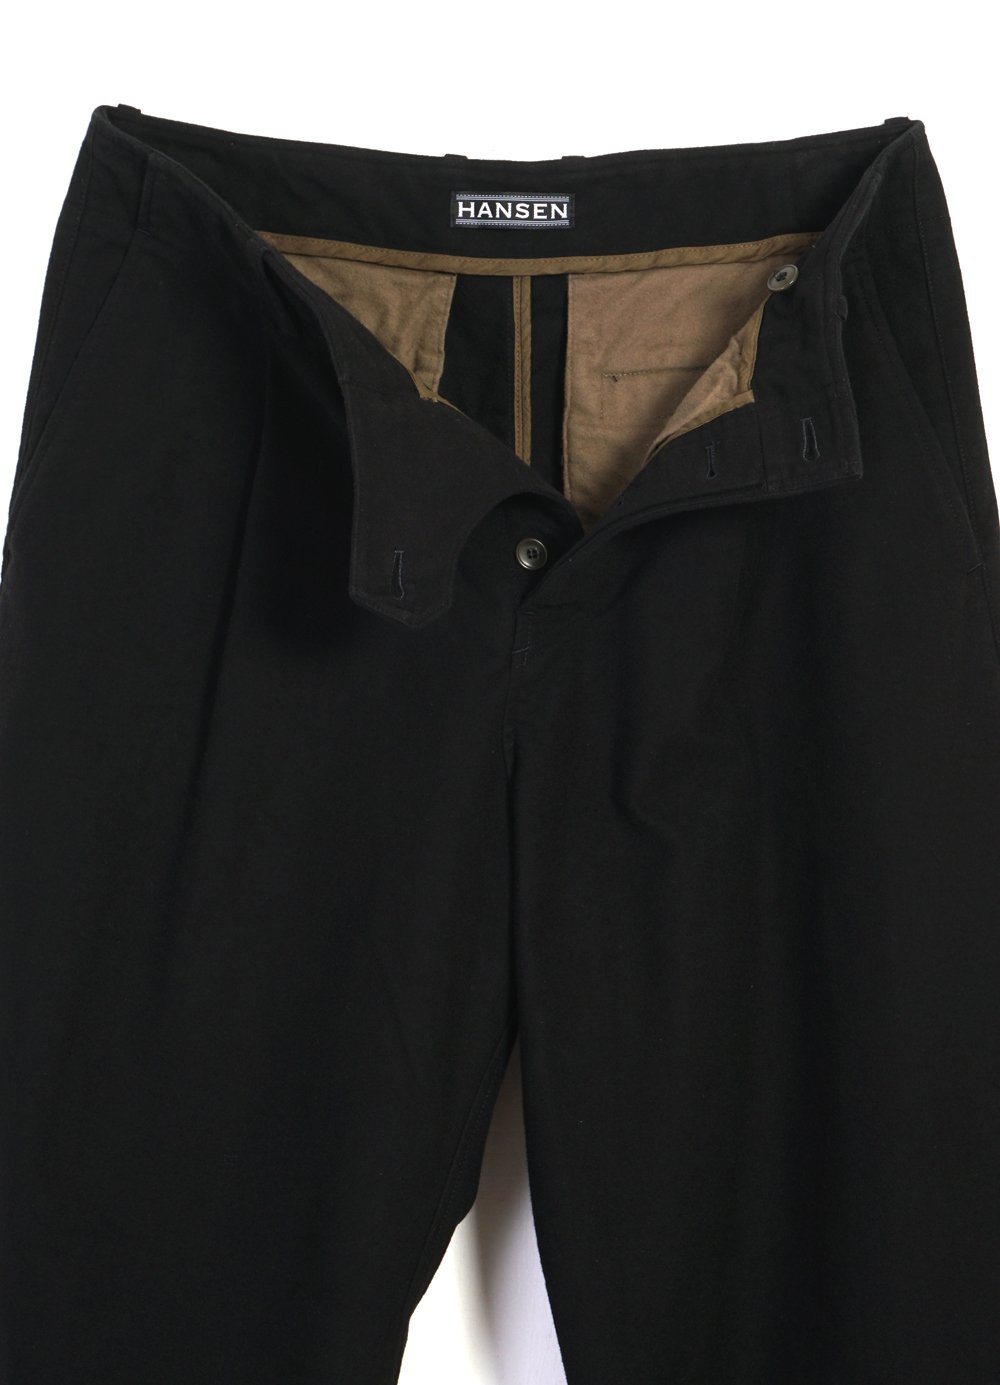 HANSEN GARMENTS - BOBBY | Super Wide Pleated Trousers | Black - HANSEN Garments